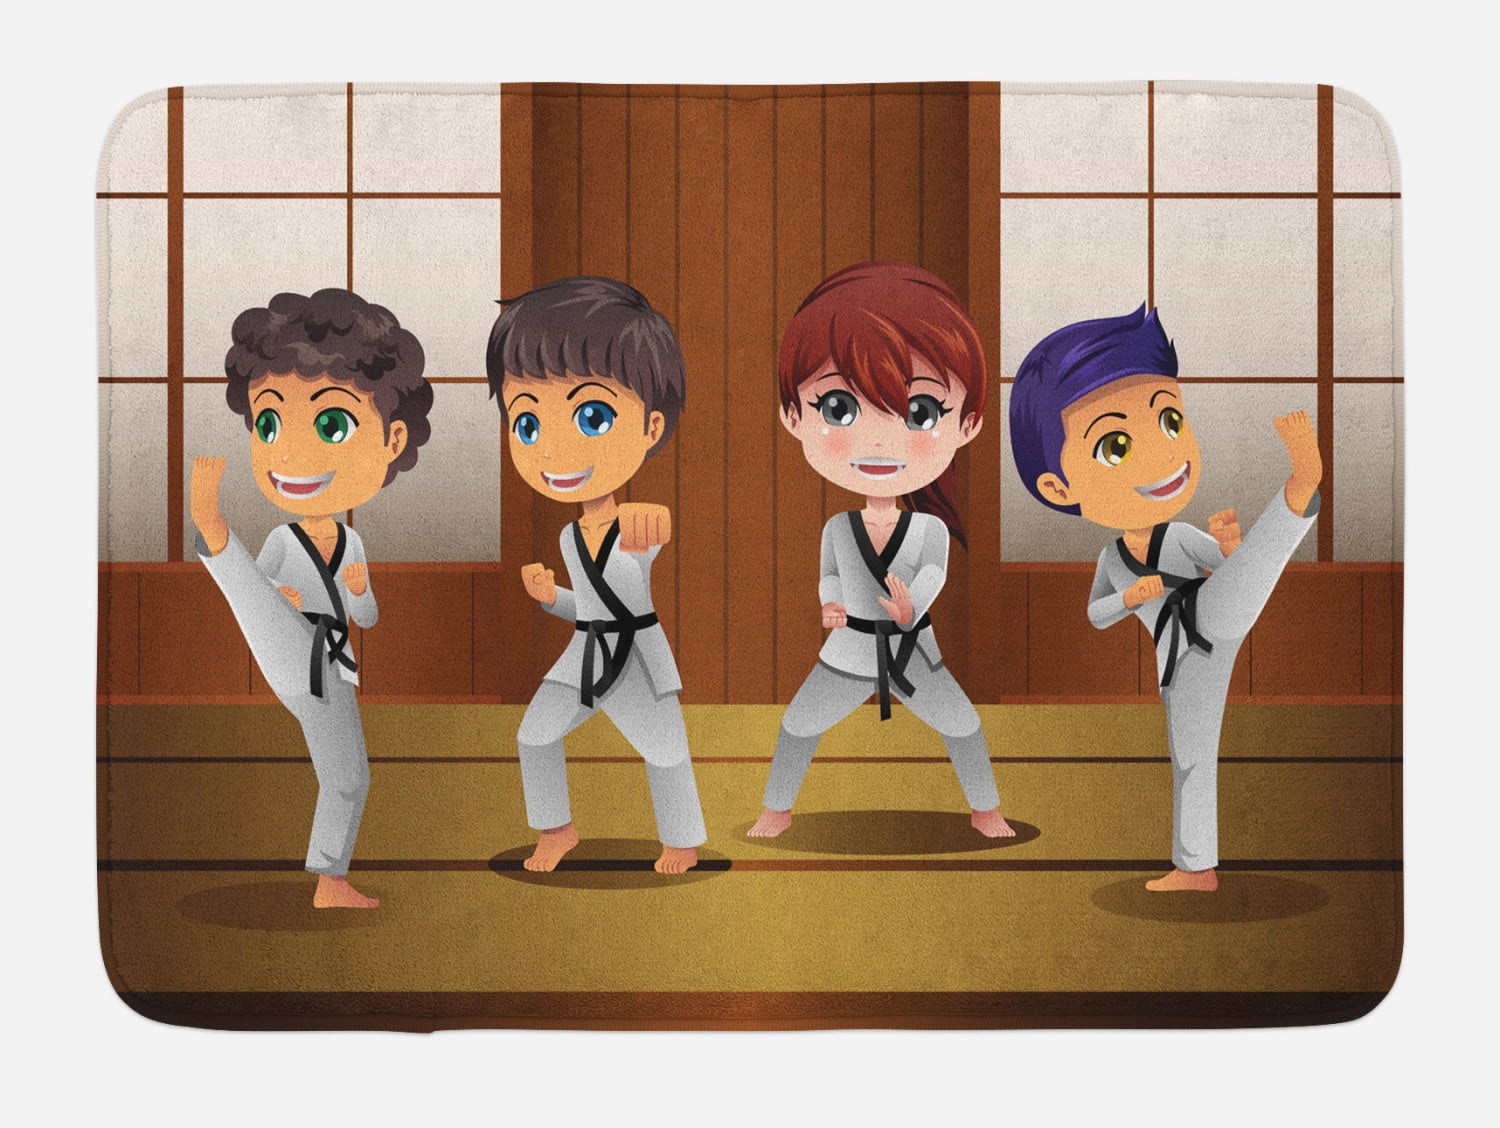 Karate Bath Mat, Practicing Martial Arts Self Defence in Dojo Cartoon  Illustration, Plush Bathroom Decor Mat with Non Slip Backing, 